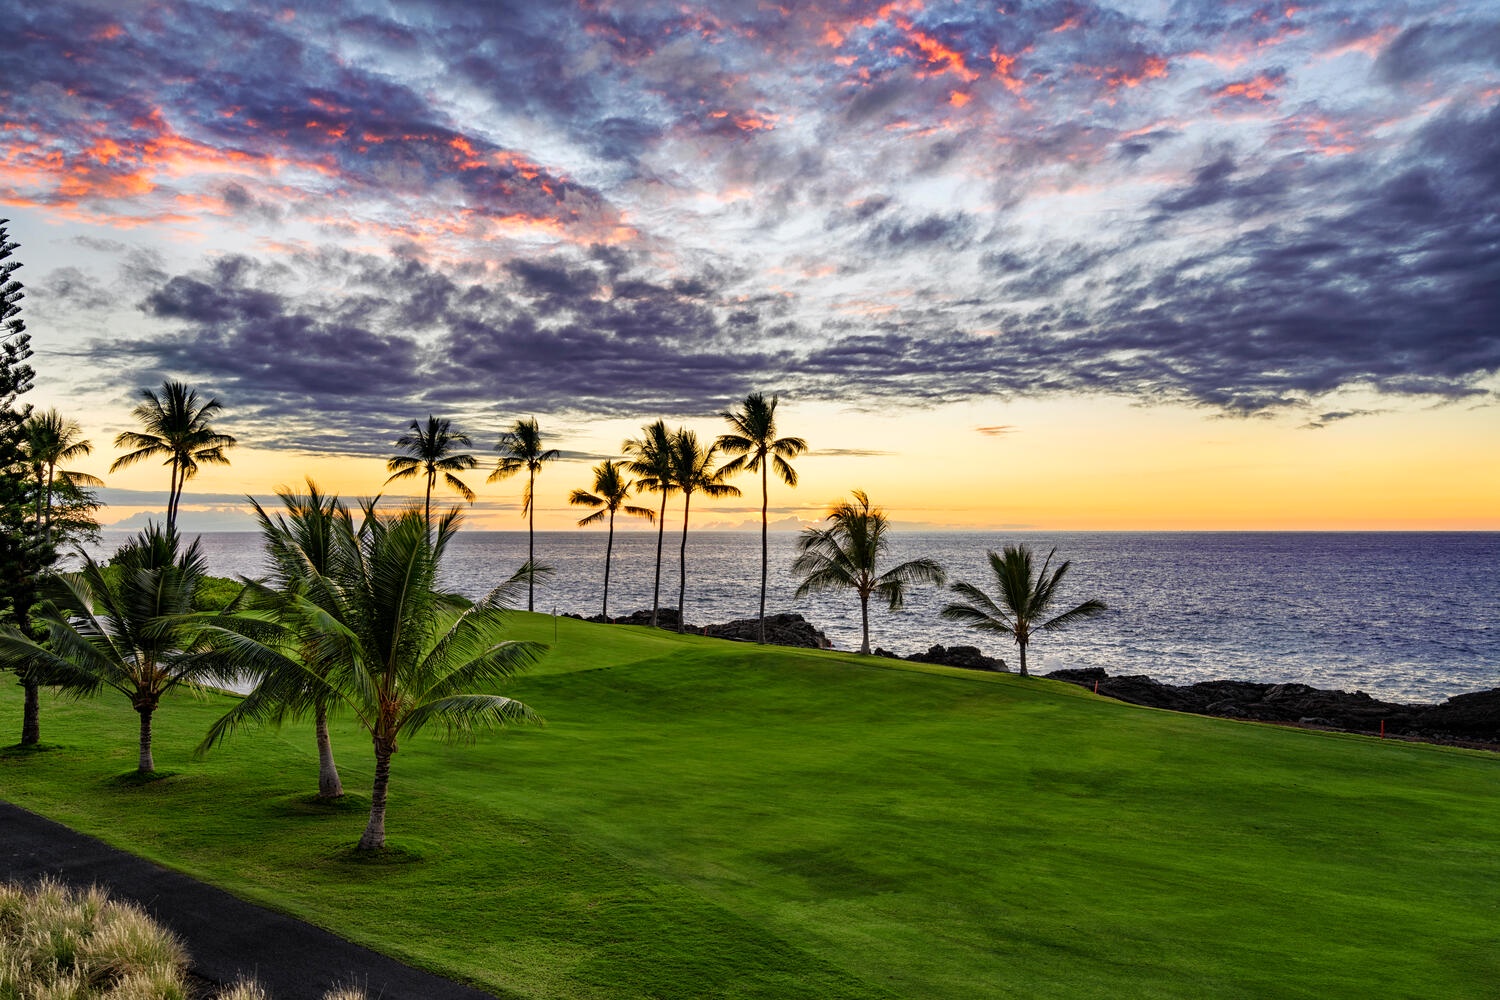 Kailua Kona Vacation Rentals, Holua Kai #32 - Enjoy the sunset views!